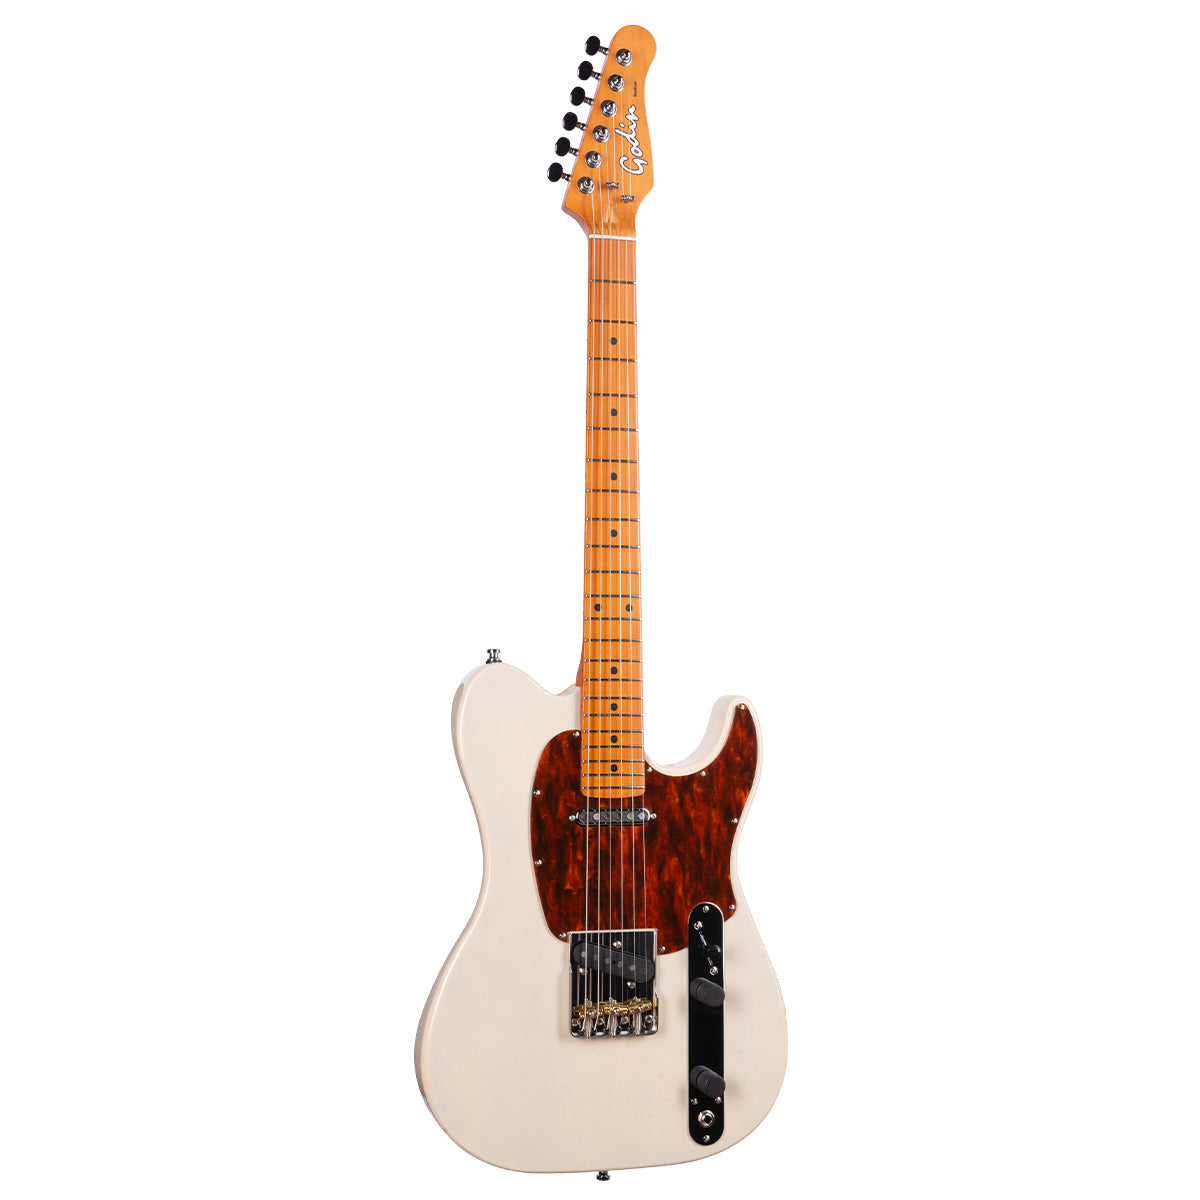 Godin Stadium Pro Electric Guitar ~ Ozark Cream MN, Electric Guitar for sale at Richards Guitars.